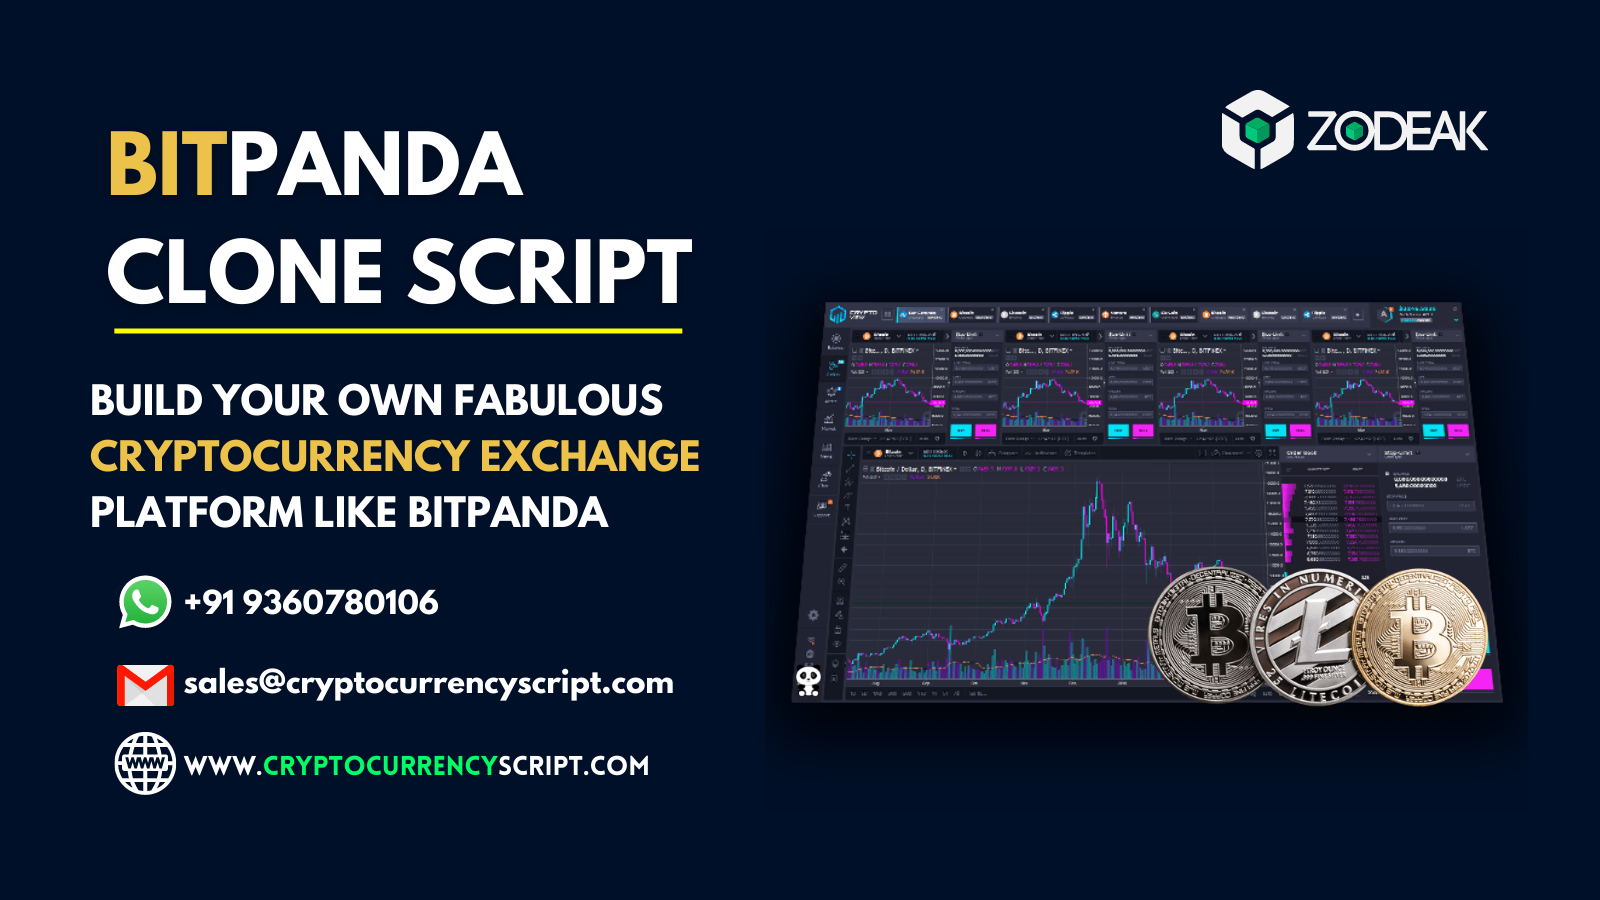 Bitpanda Clone Script – Build Your Own Fabulous Cryptocurrency Exchange Platform Like Bitpanda